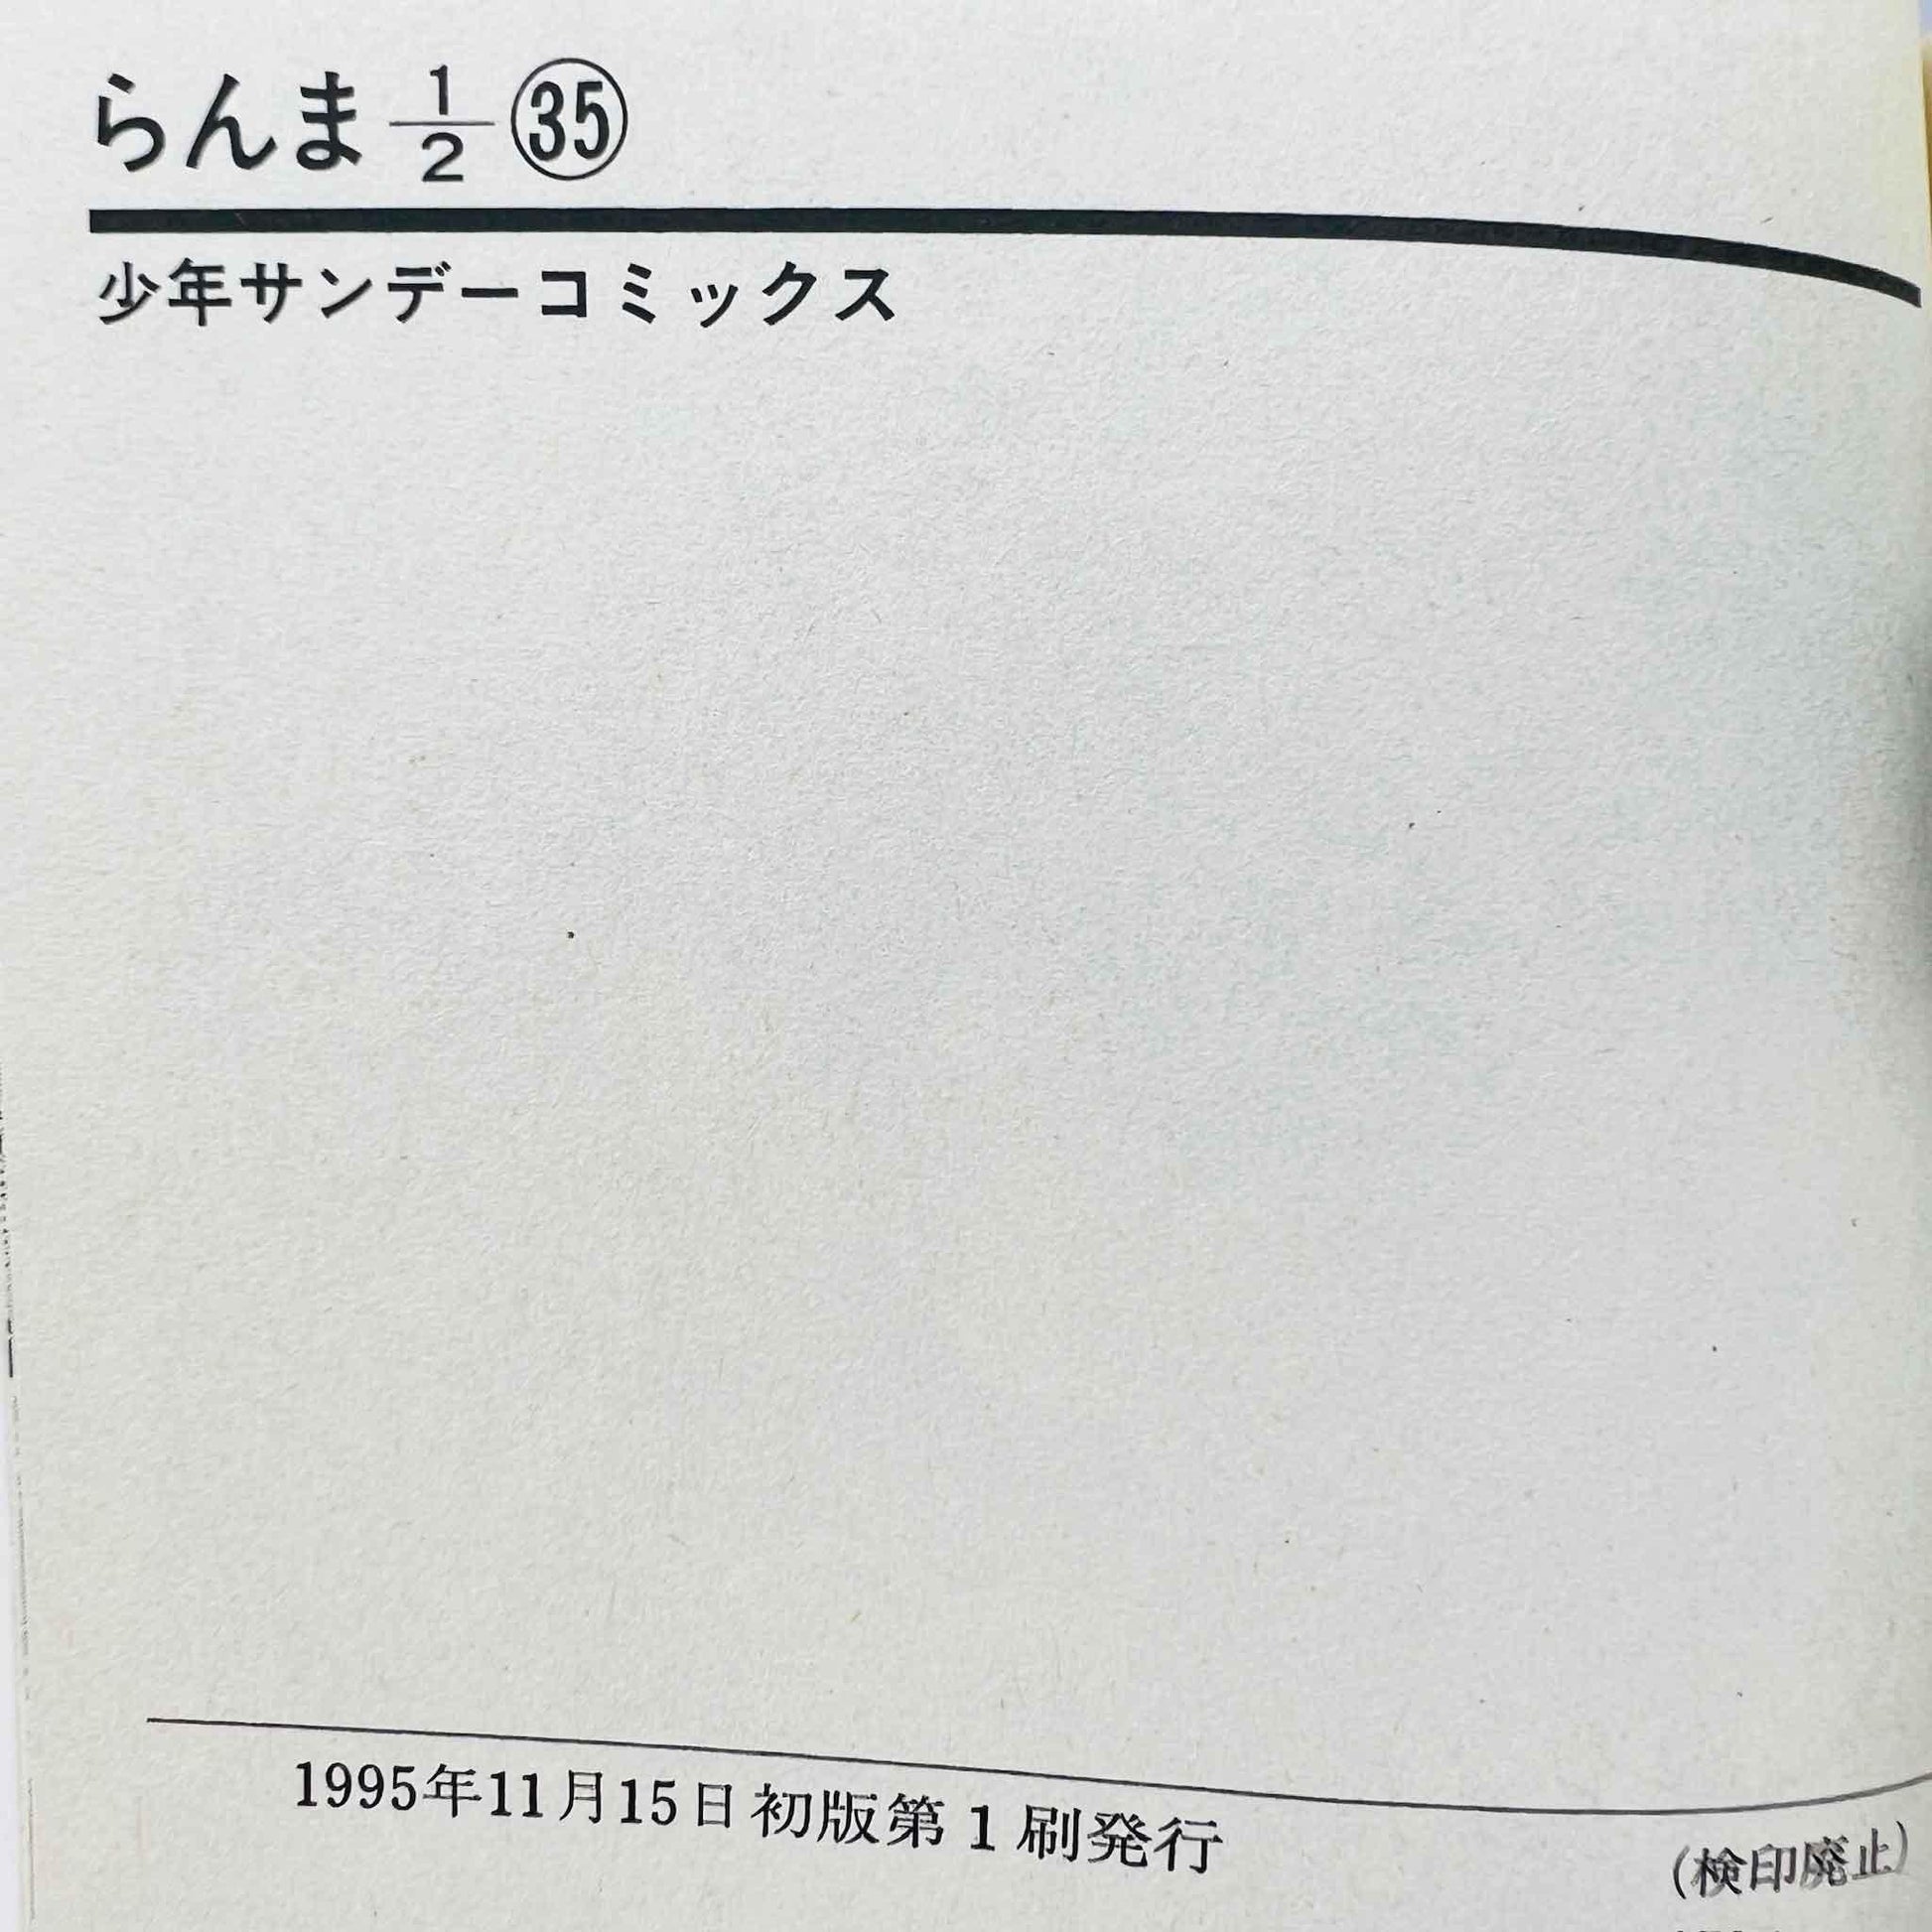 Ranma ½ - Volume 35 - 1stPrint.net - 1st First Print Edition Manga Store - M-RANMA-35-001